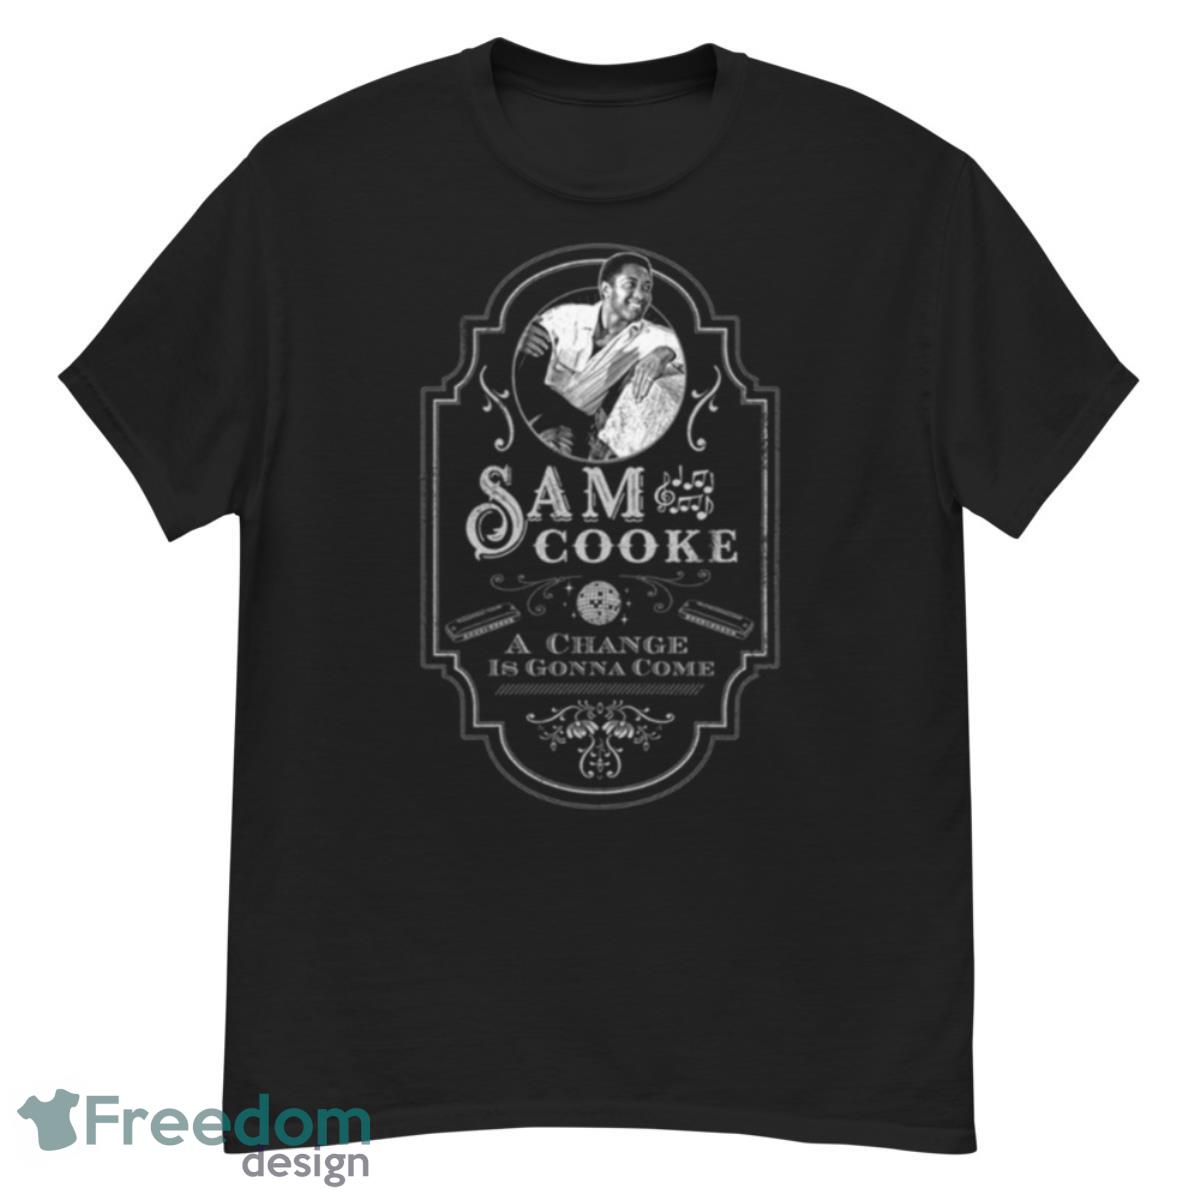 Tribute Sam Cooke A Change Is Gonna Come Disco Ball shirt - G500 Men’s Classic T-Shirt